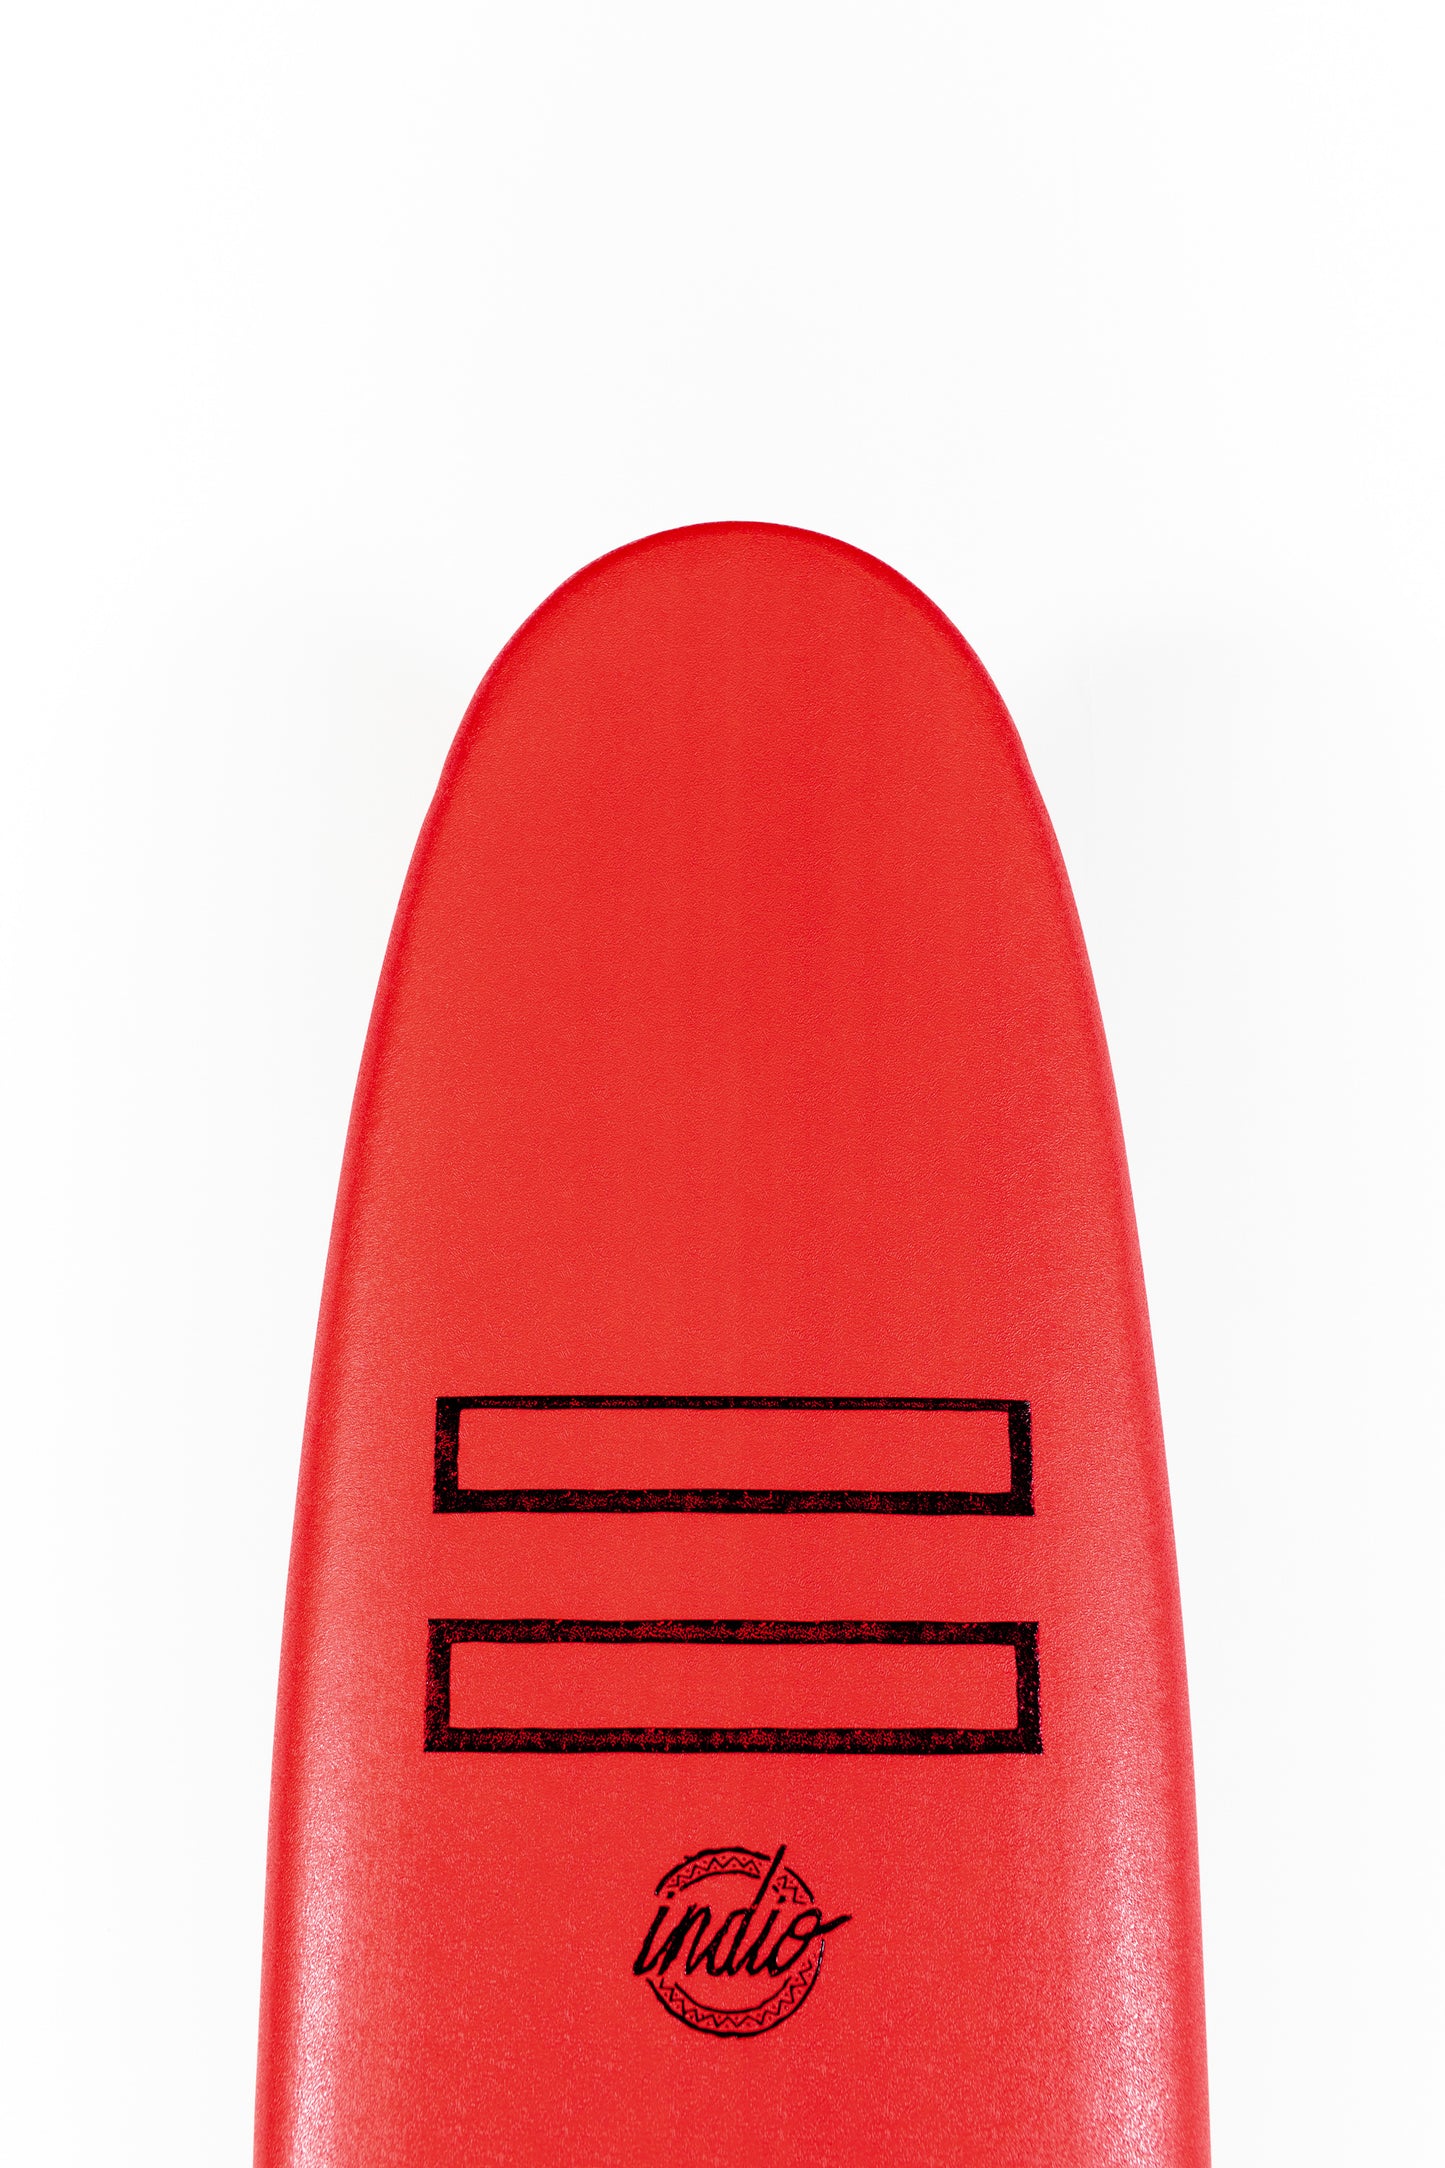 
                  
                    Pukas-Surf-Shop-Indio-Surfboards-Softboards-Mini-Long
                  
                